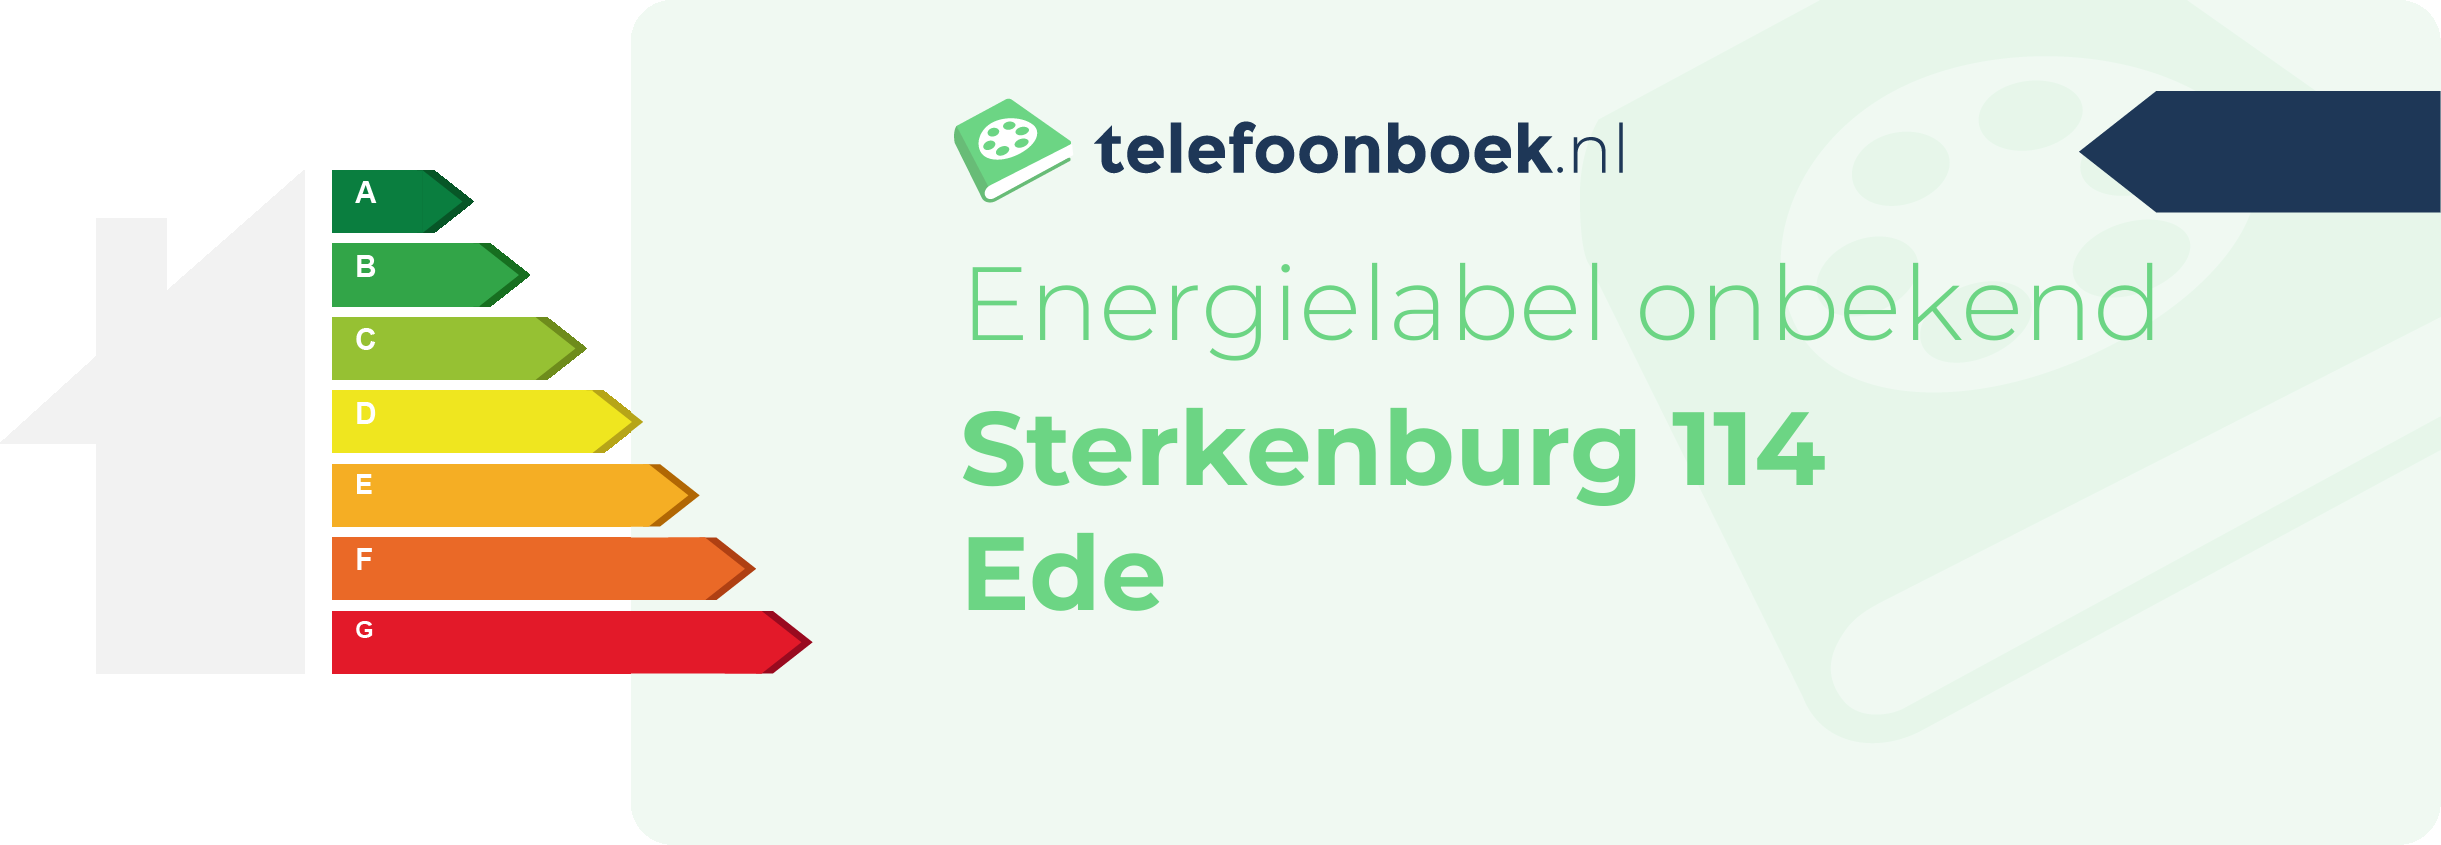 Energielabel Sterkenburg 114 Ede